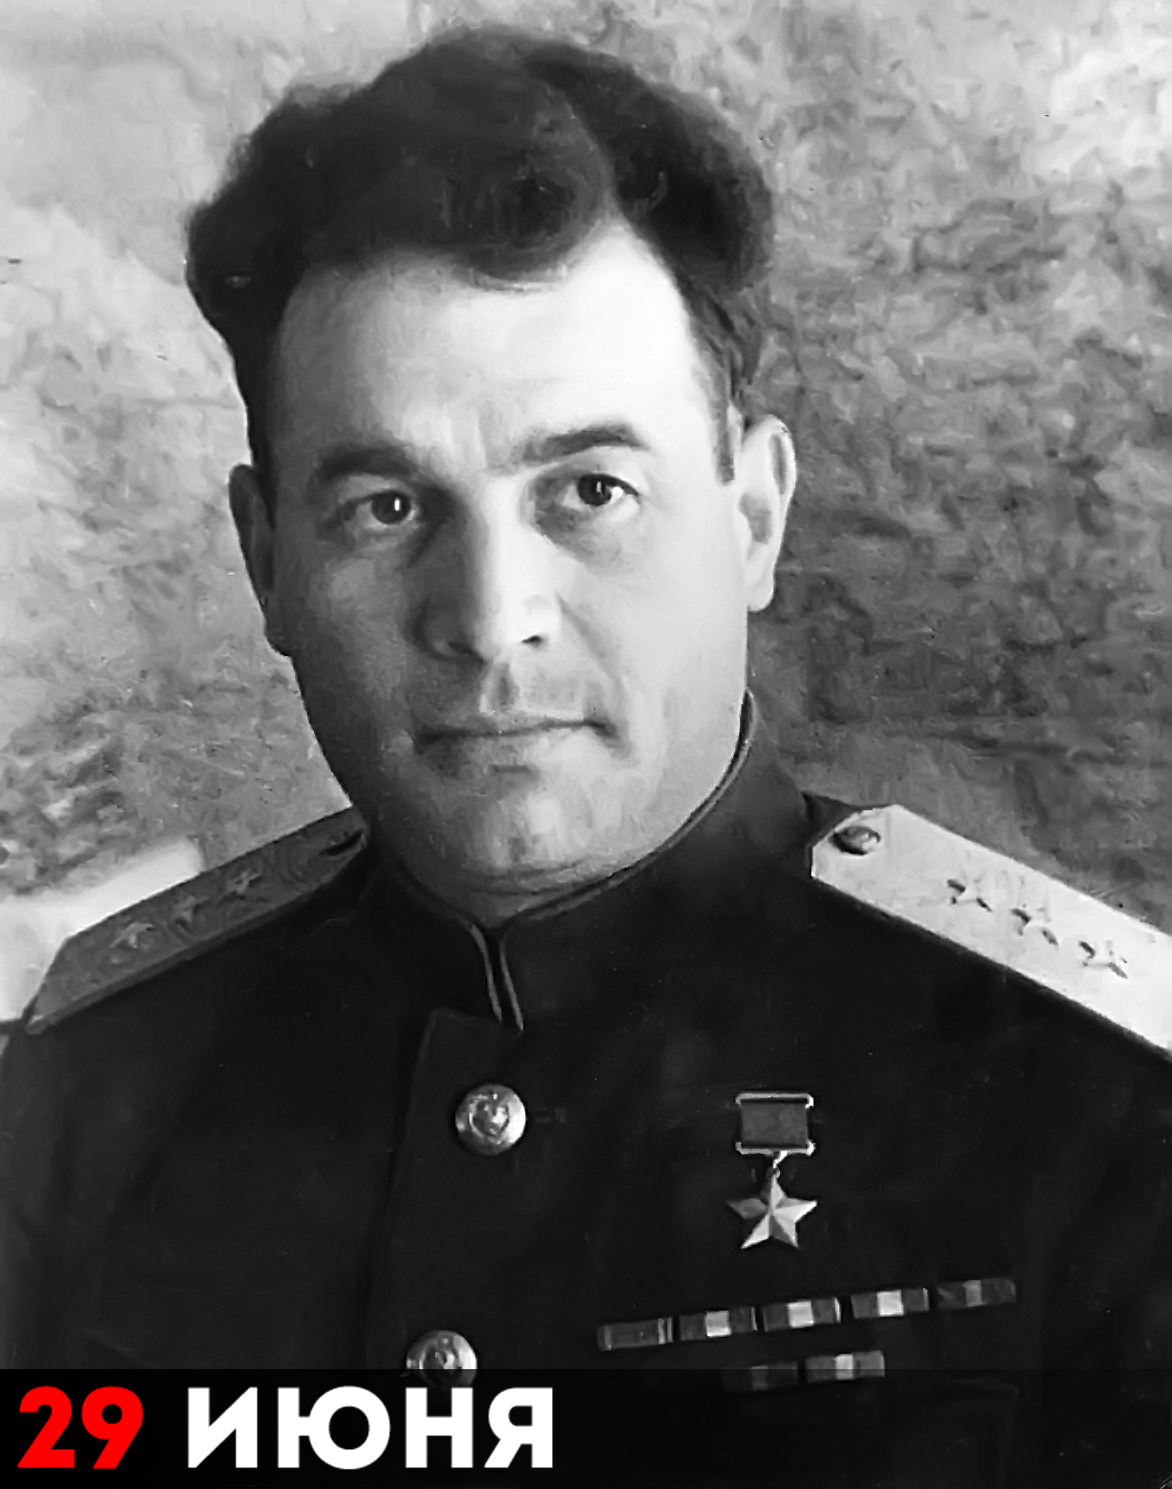 Иван Данилович Черняховский